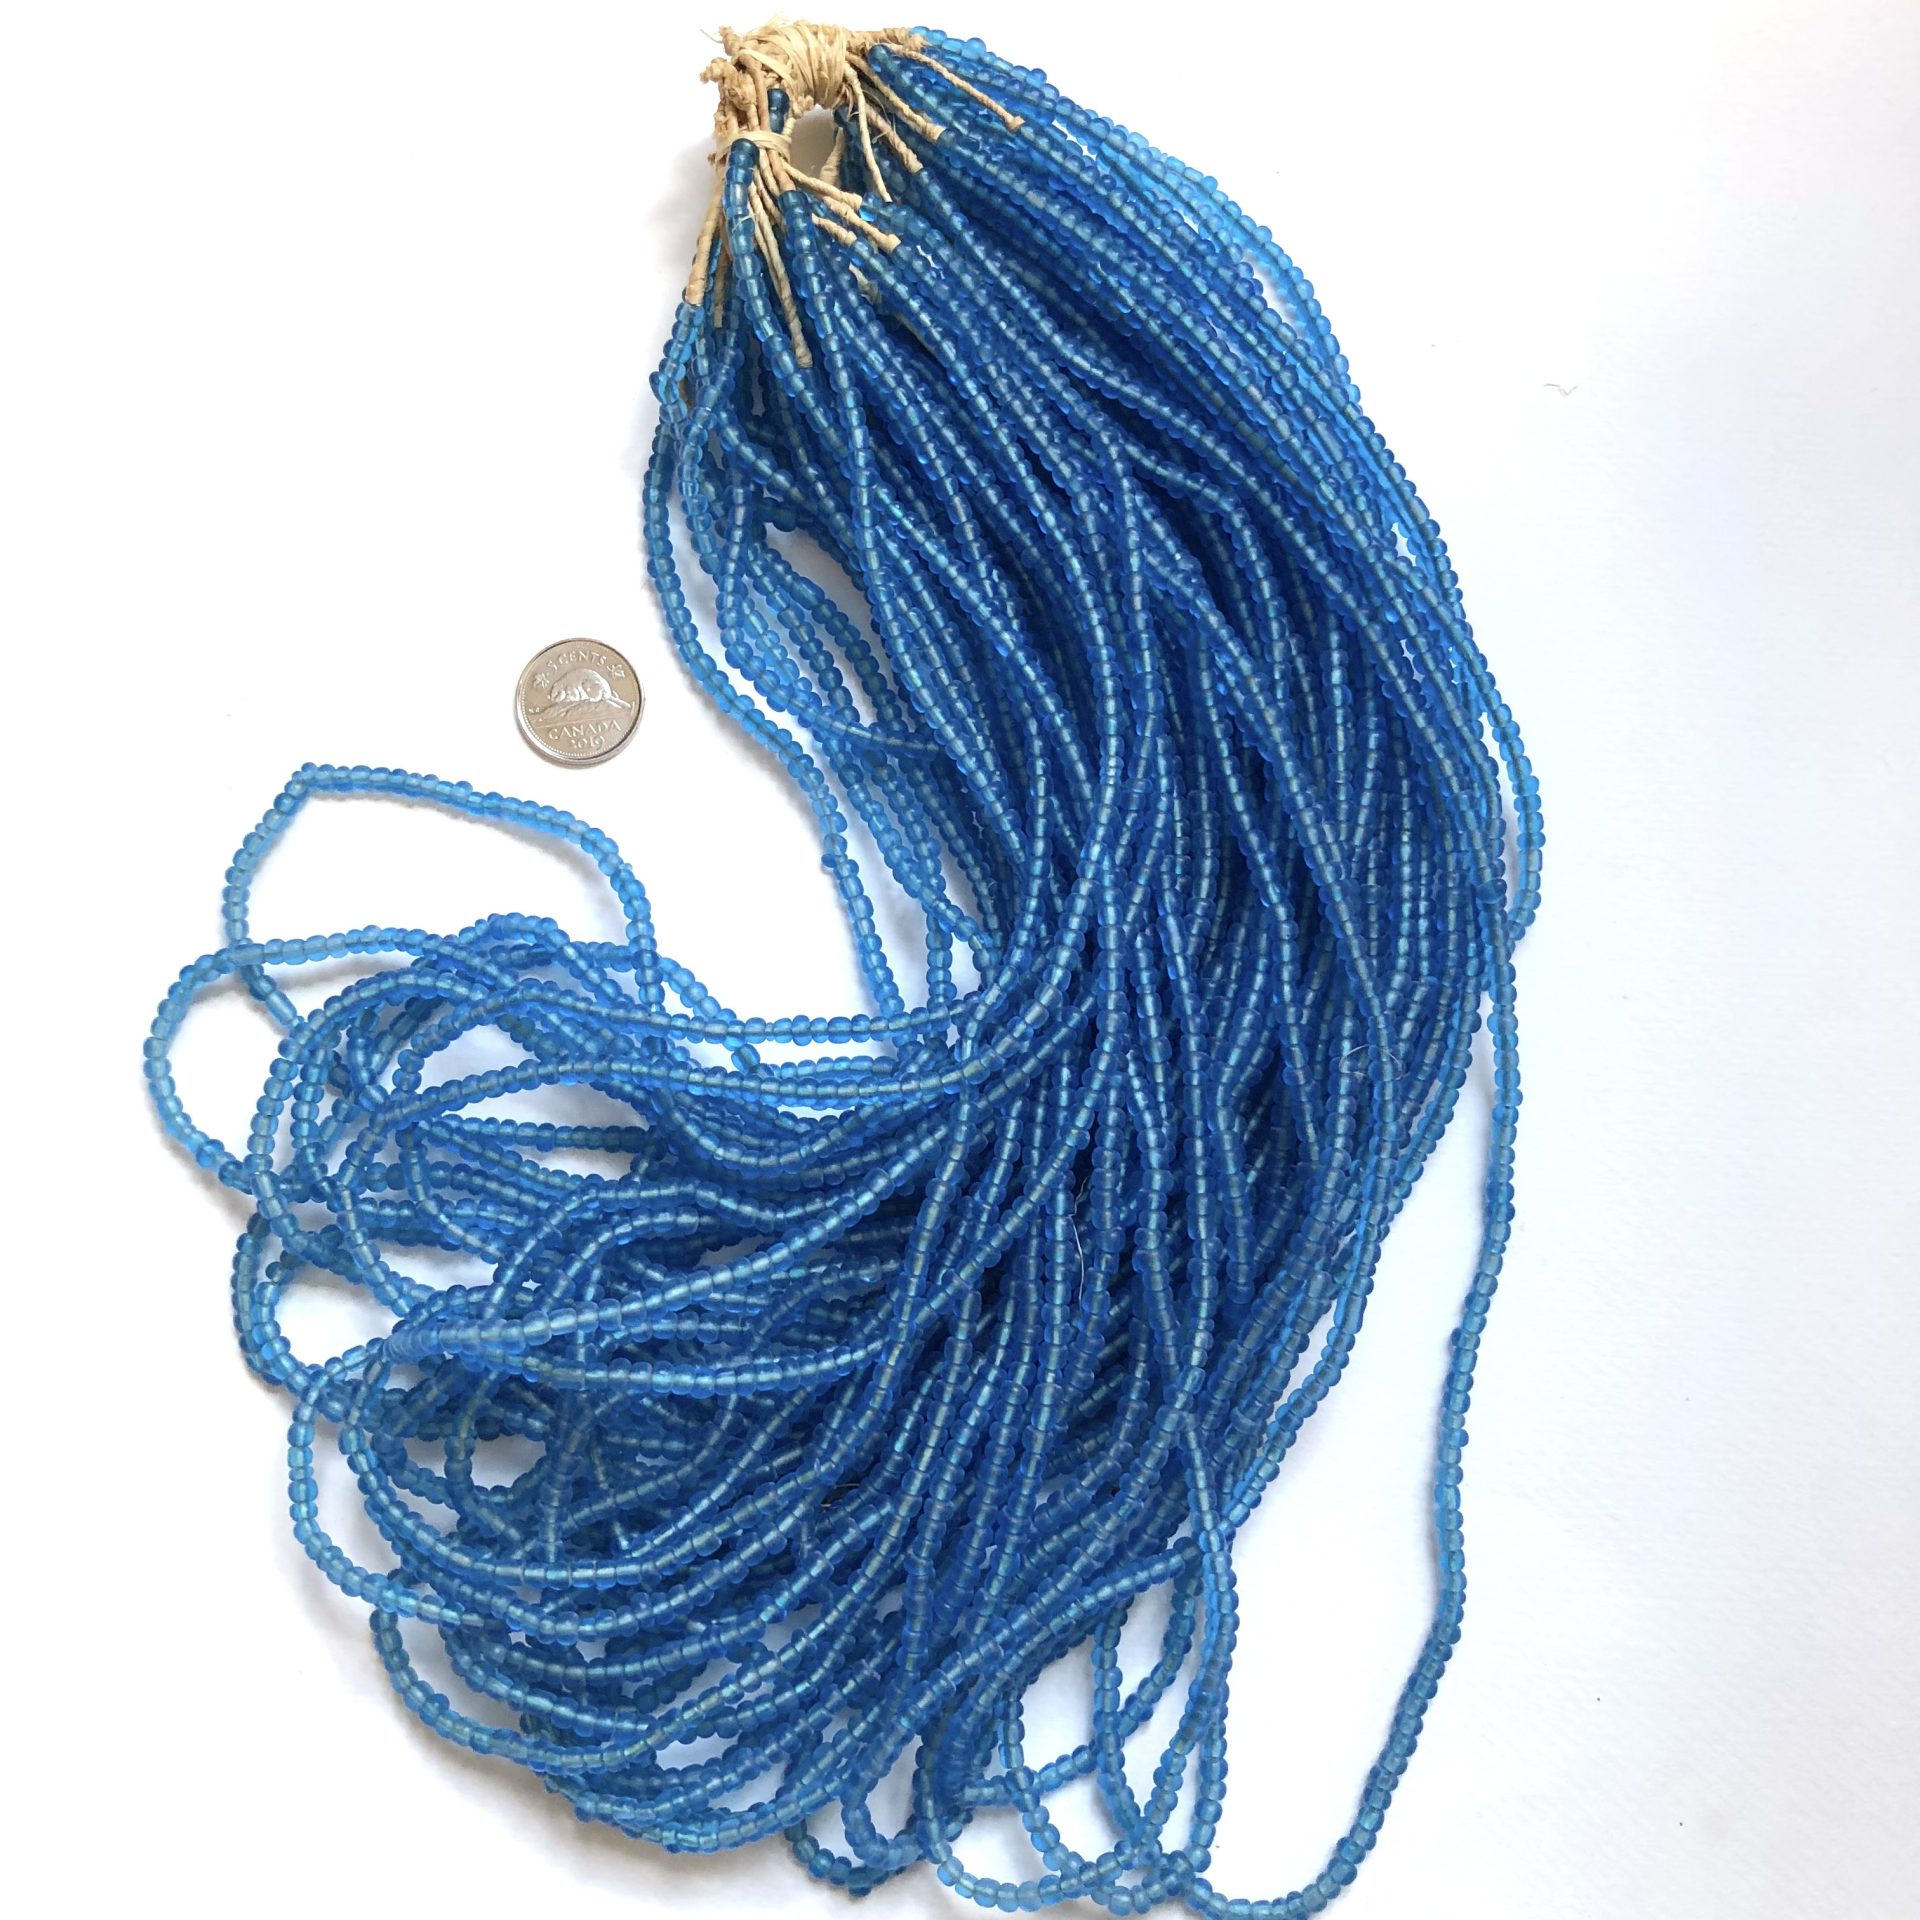 Translucent Blue Small Glass Beads